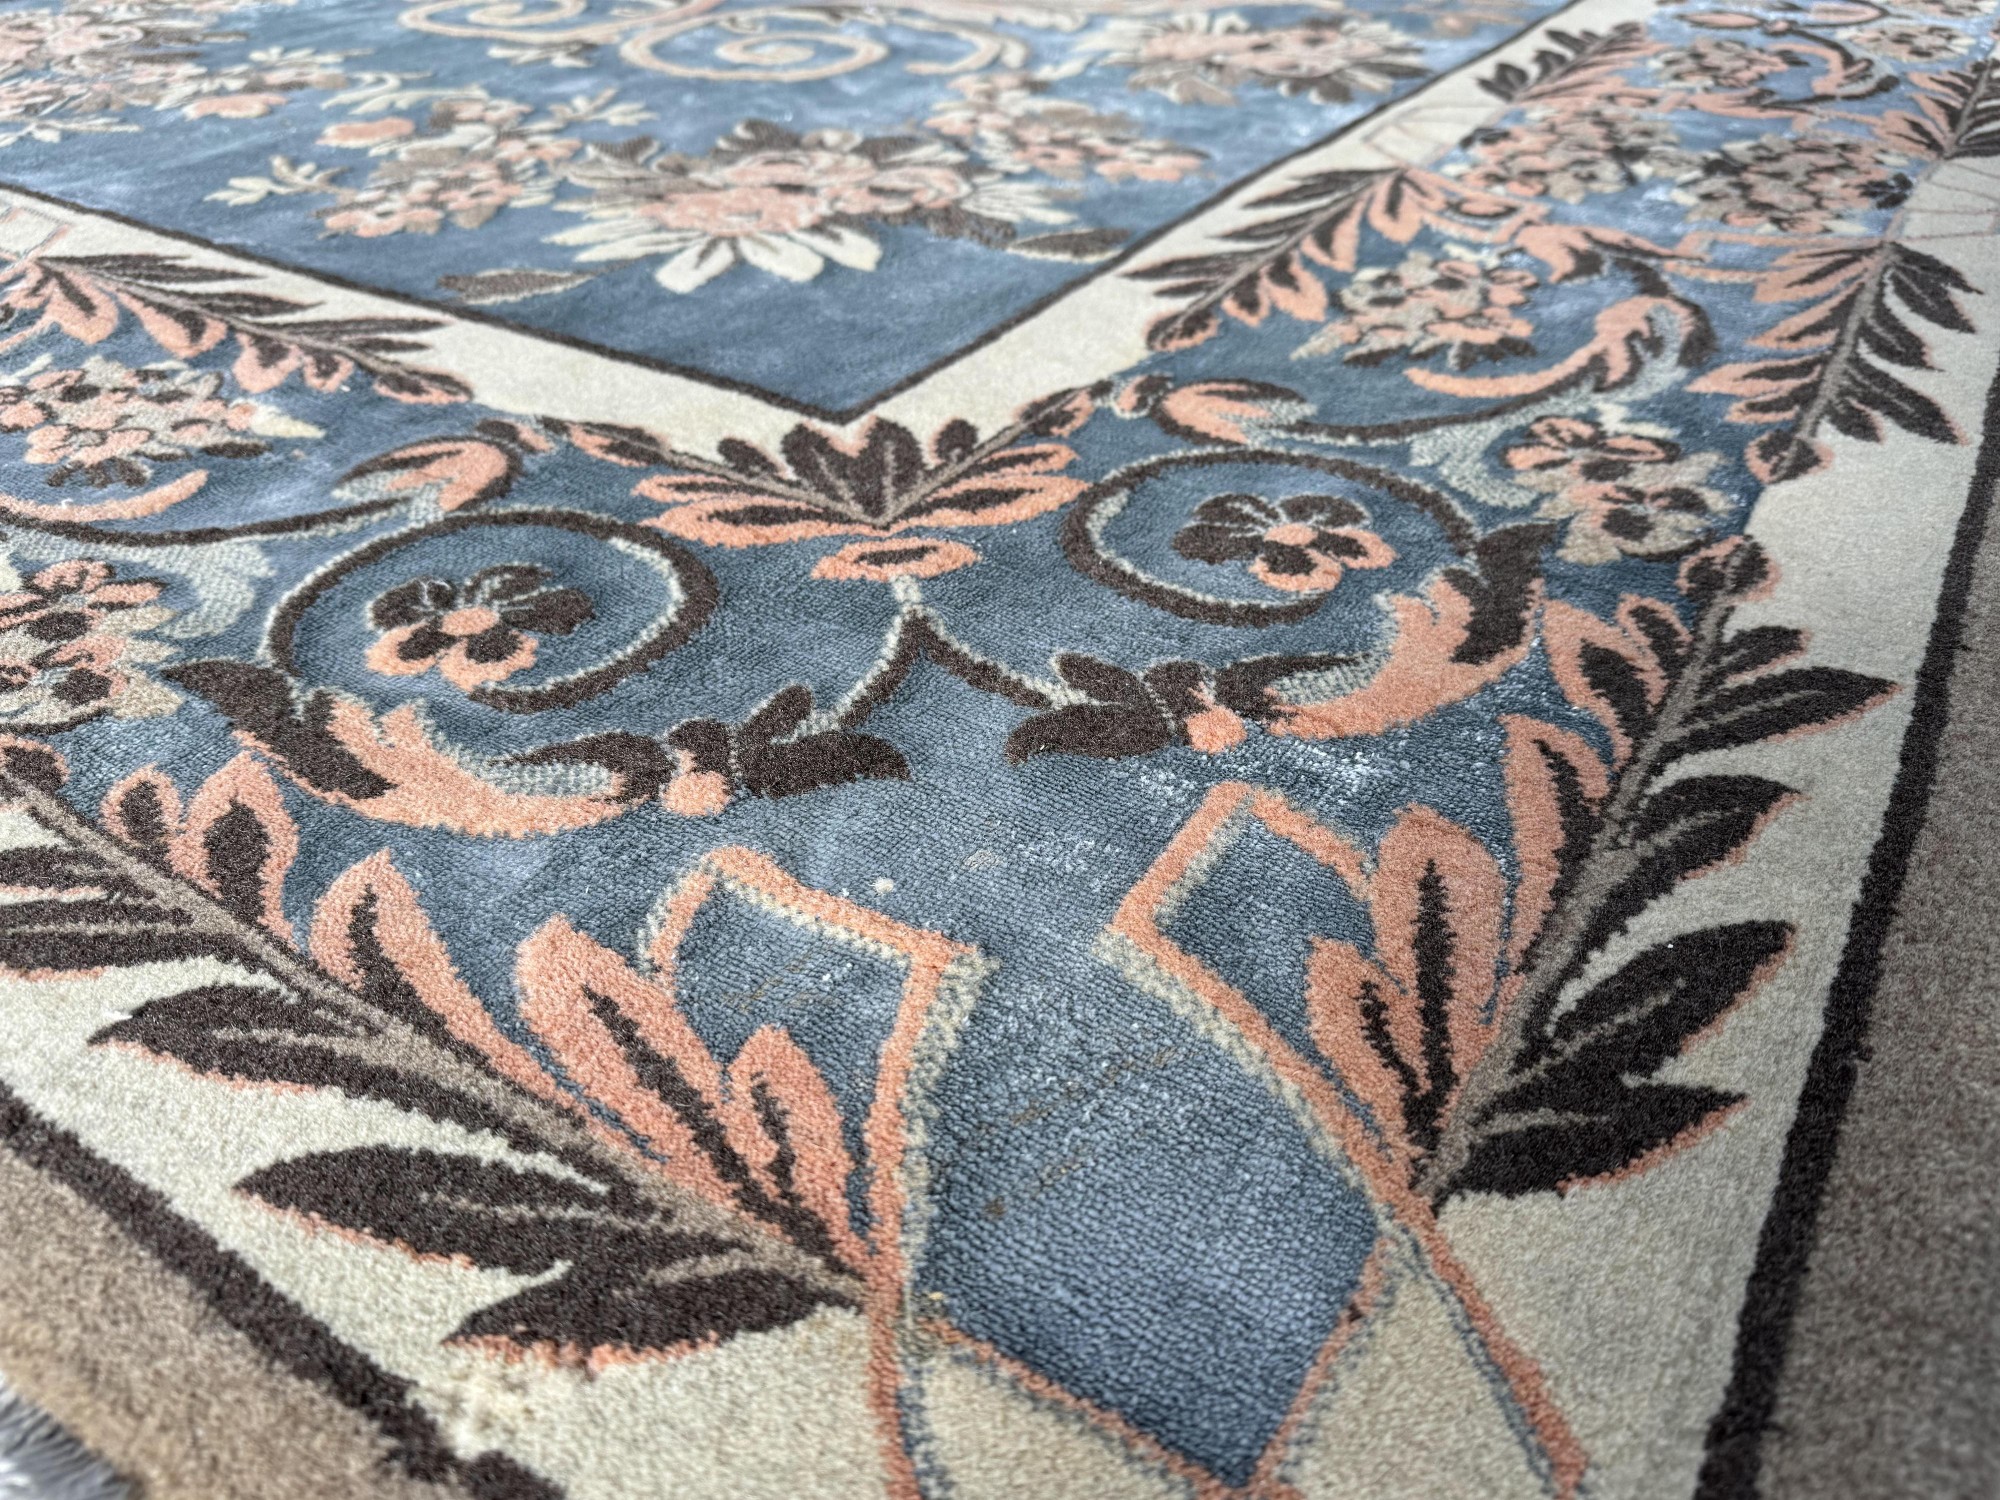 فرش پشمی ماشینی طبیعی و ارگانیک کد 0070 - زمینه آبی کم رنگ - حاشیه آبی کم رنگ